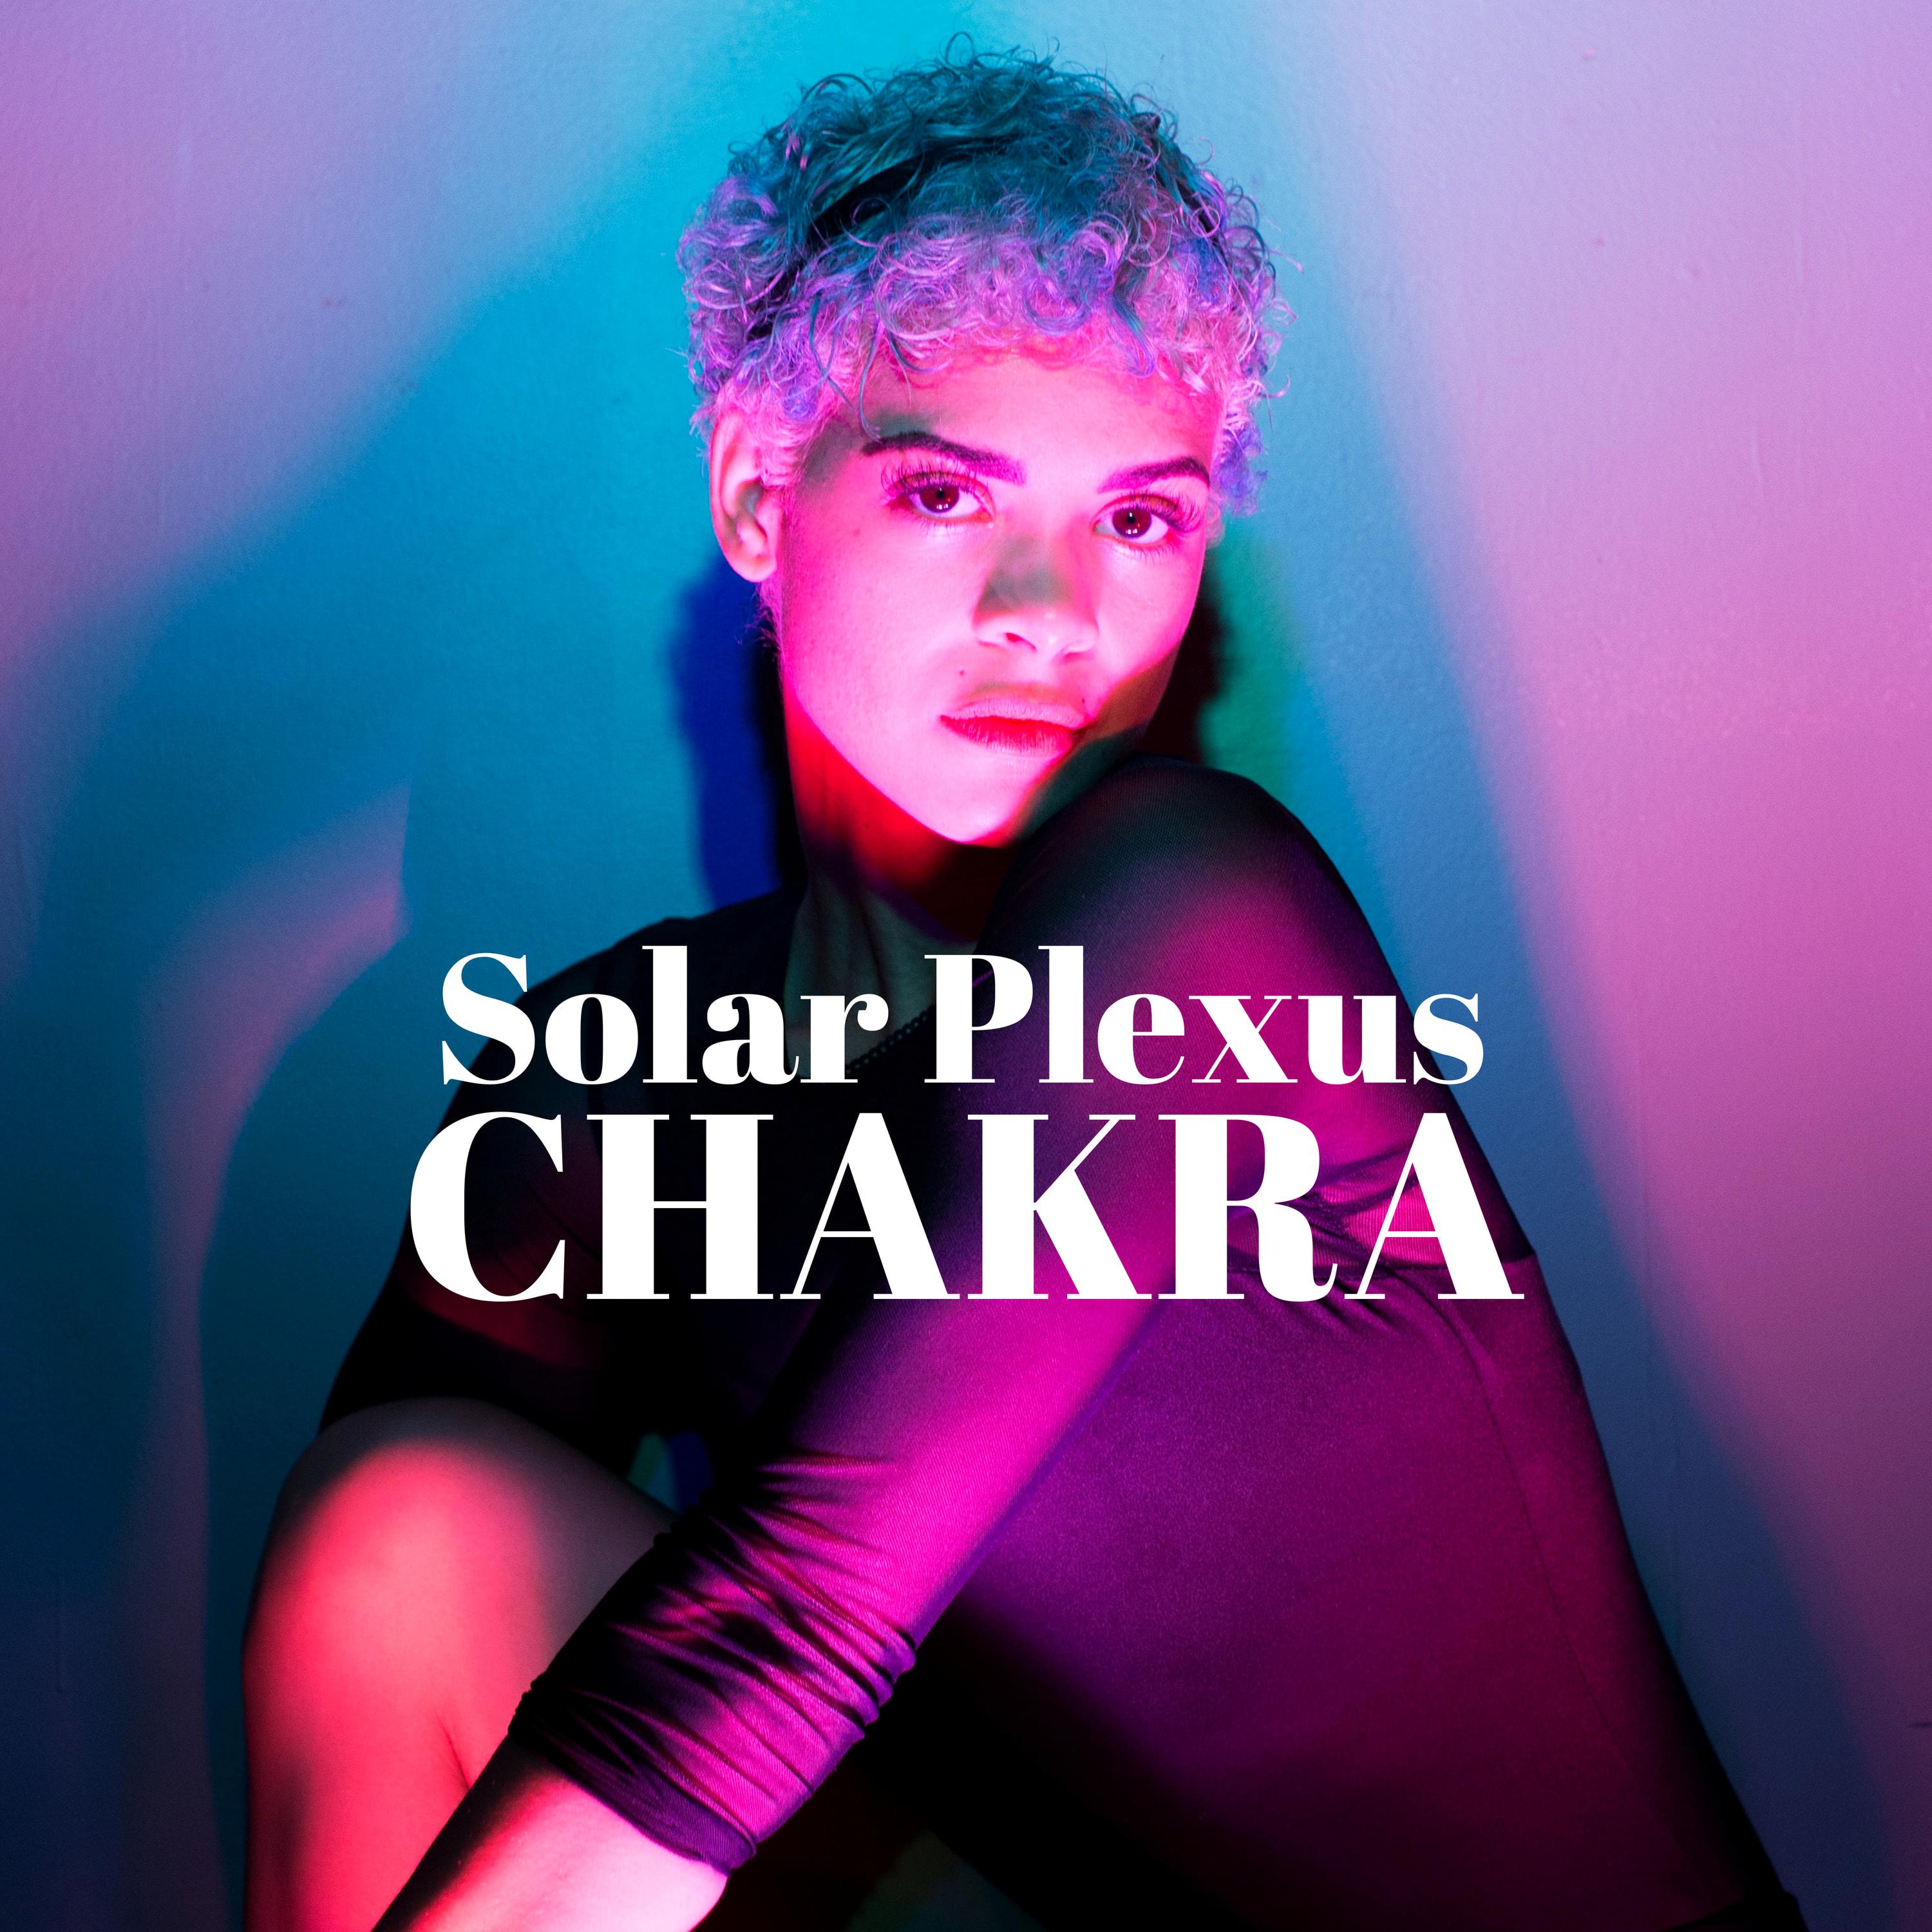 Solar Plexus Chakra